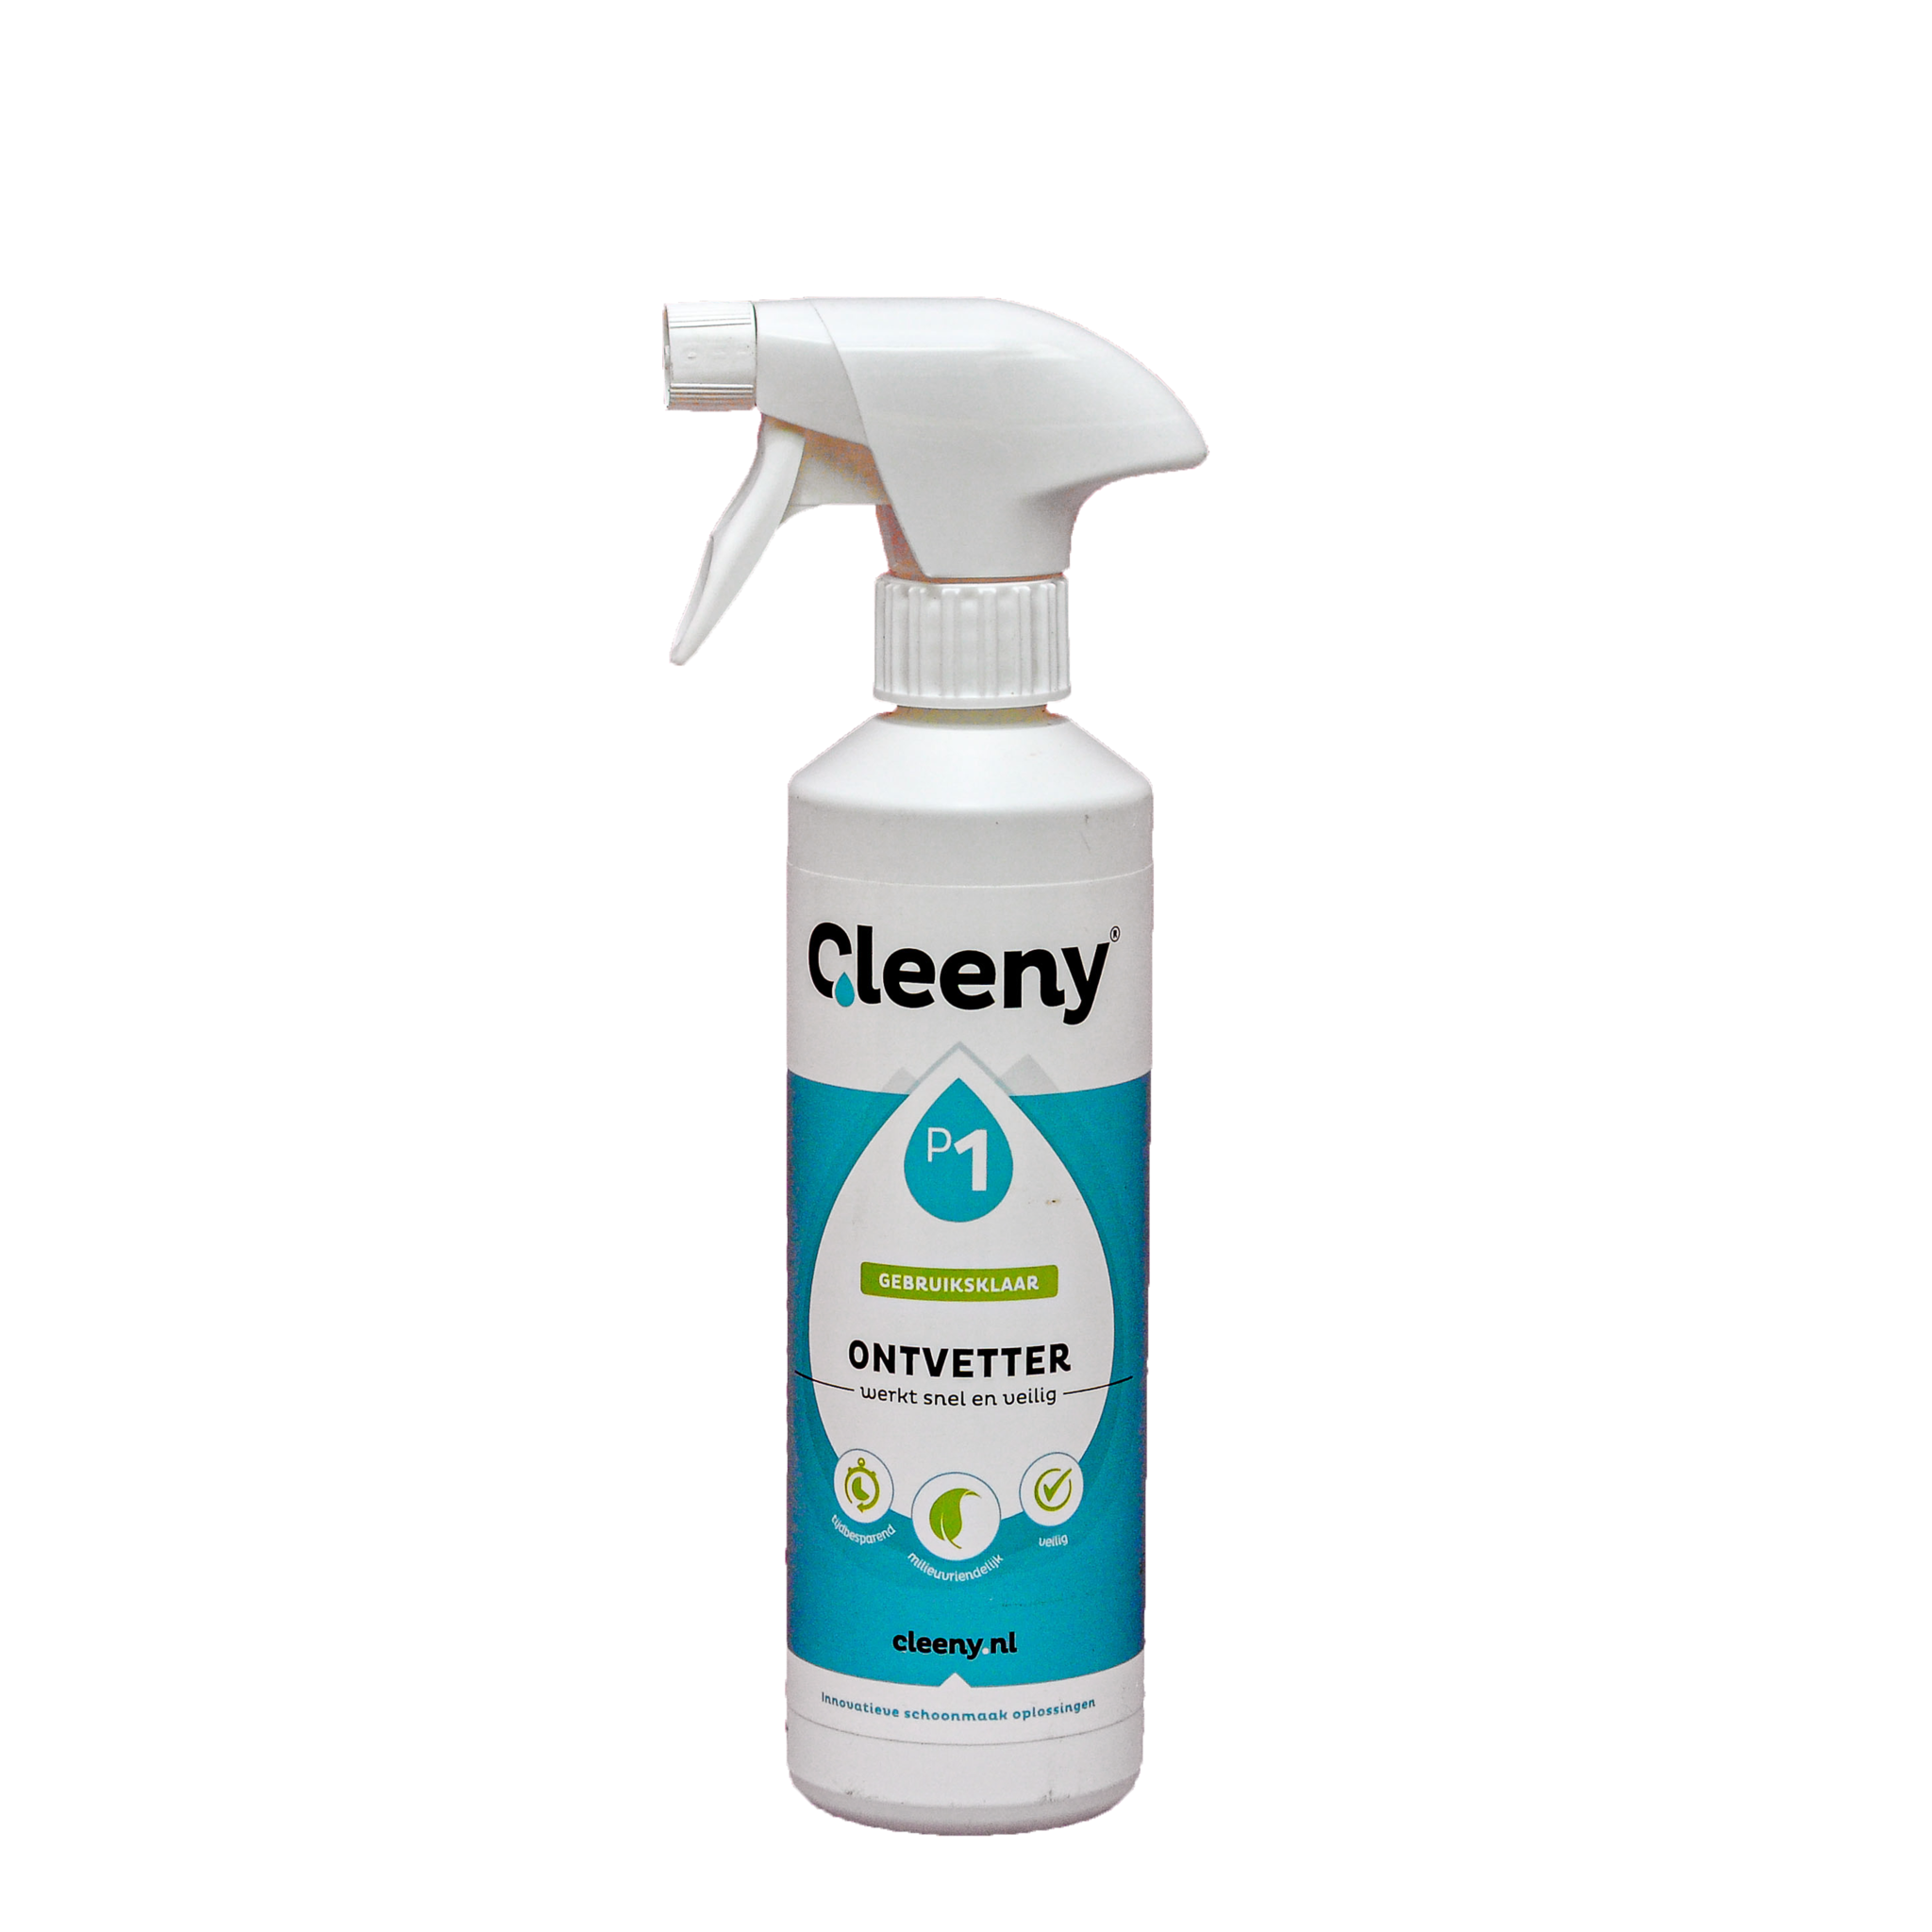 Cleeny Cleeny P1 Entfetter, Sprühflasche gebrauchsfertig